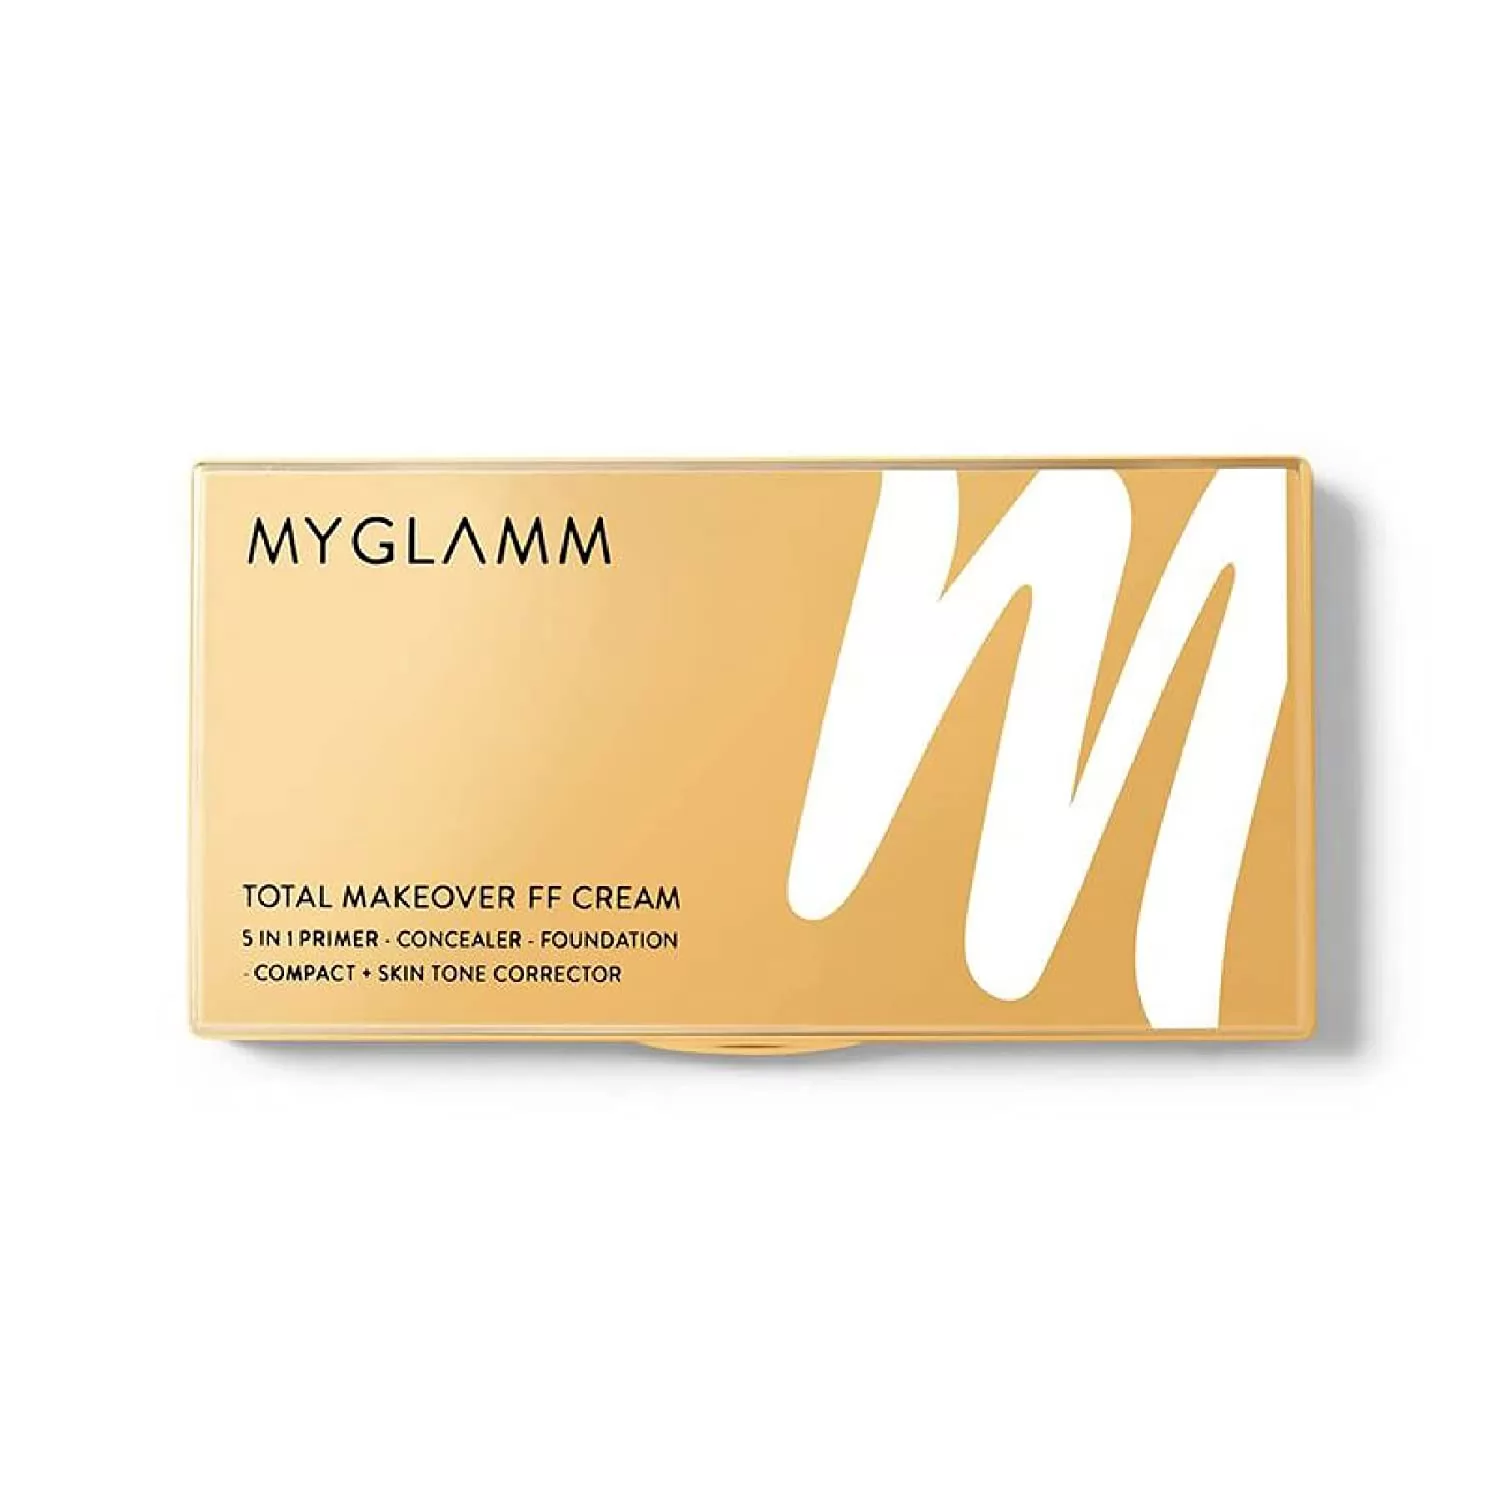  MyGlamm Total Makeover FF क्रीम फाउंडेशन पैलेट-लेट